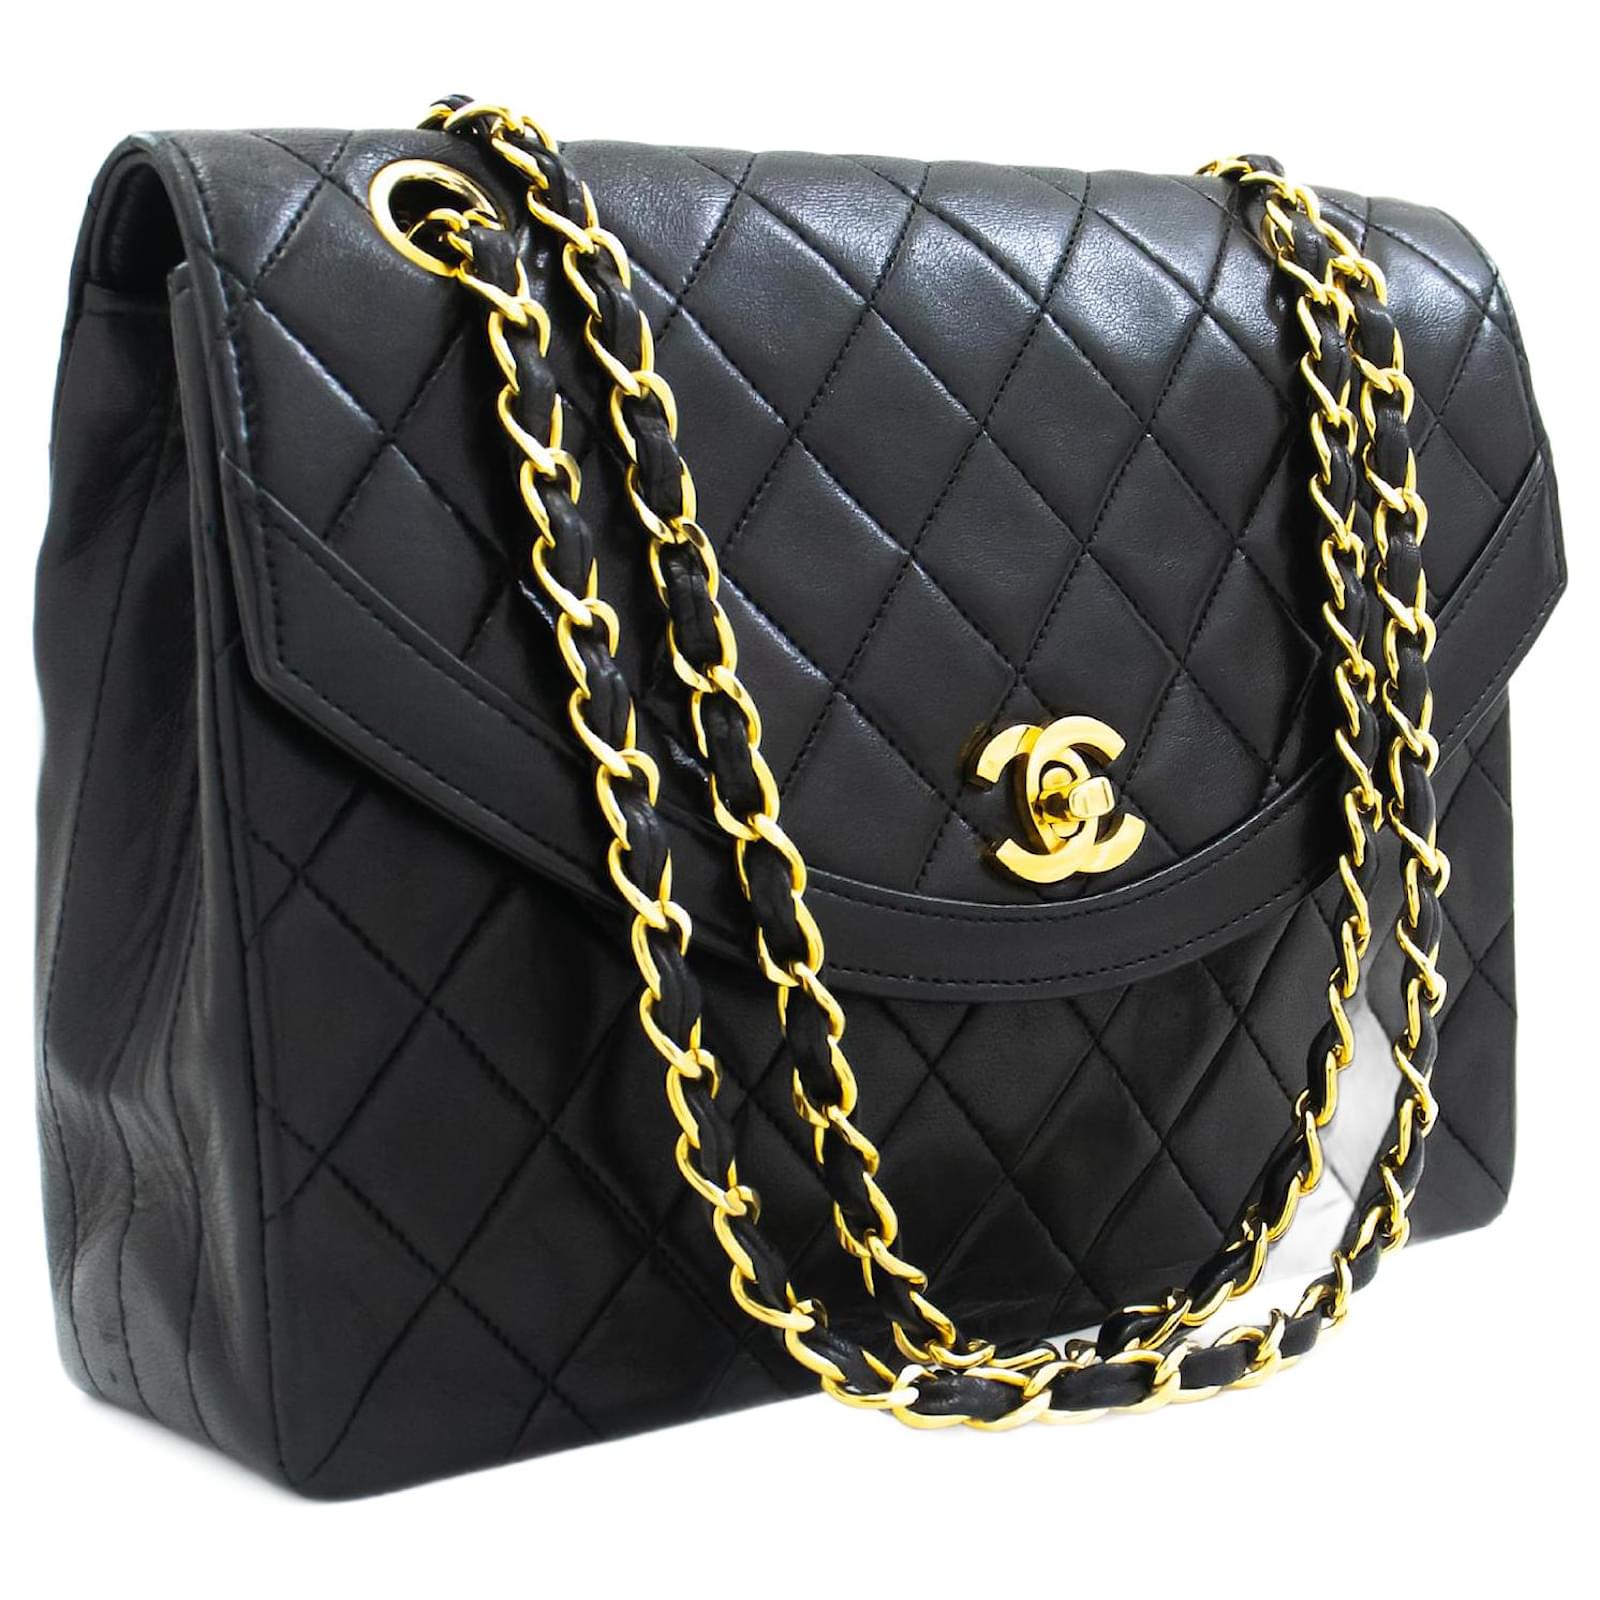 Handbags Chanel Chanel Vintage Half Moon Chain Shoulder Bag Single Flap Quilted